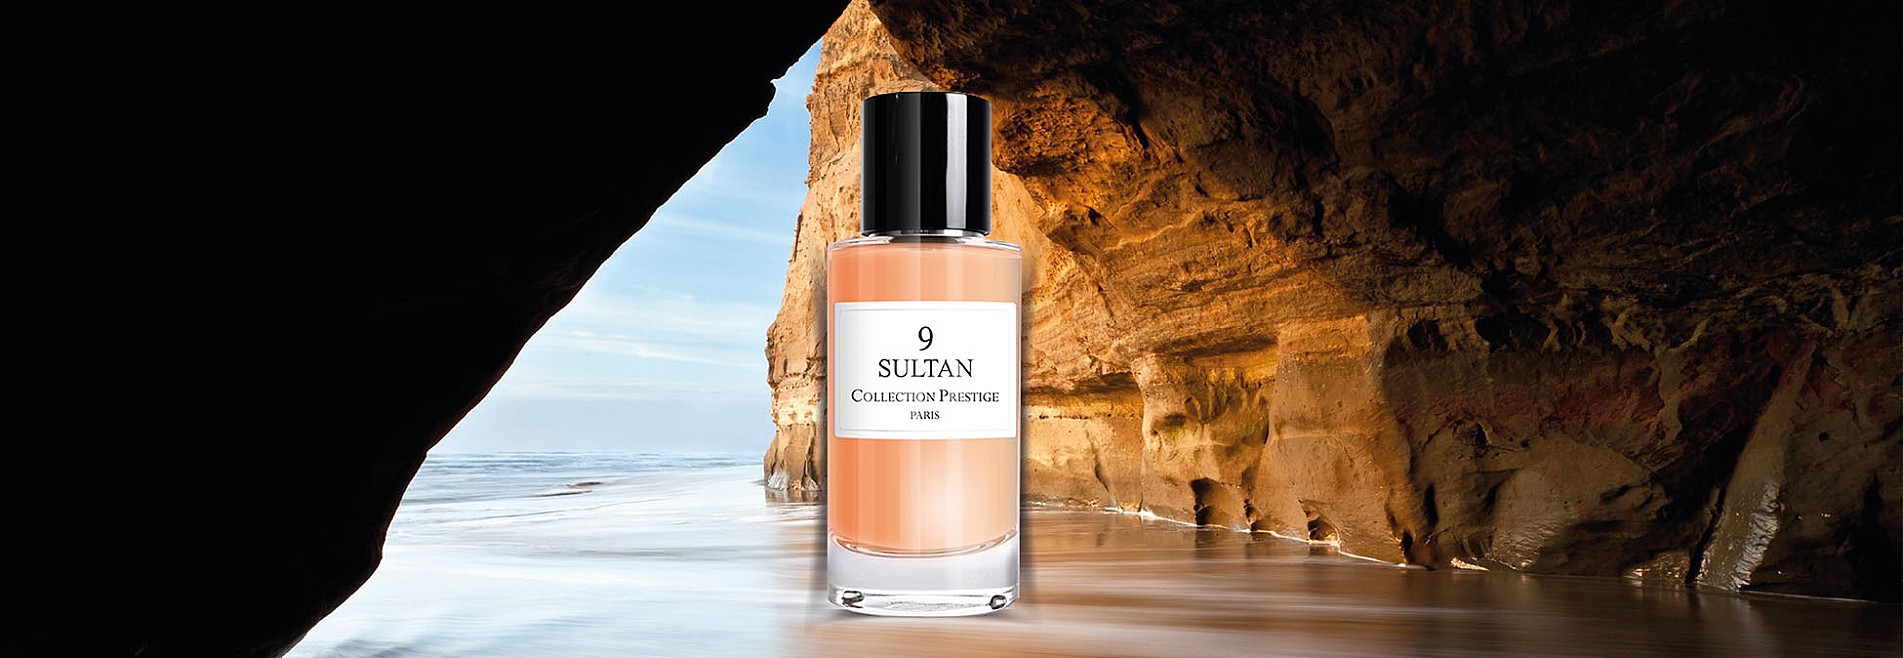 Collection-prestige-sultan-9-parfum